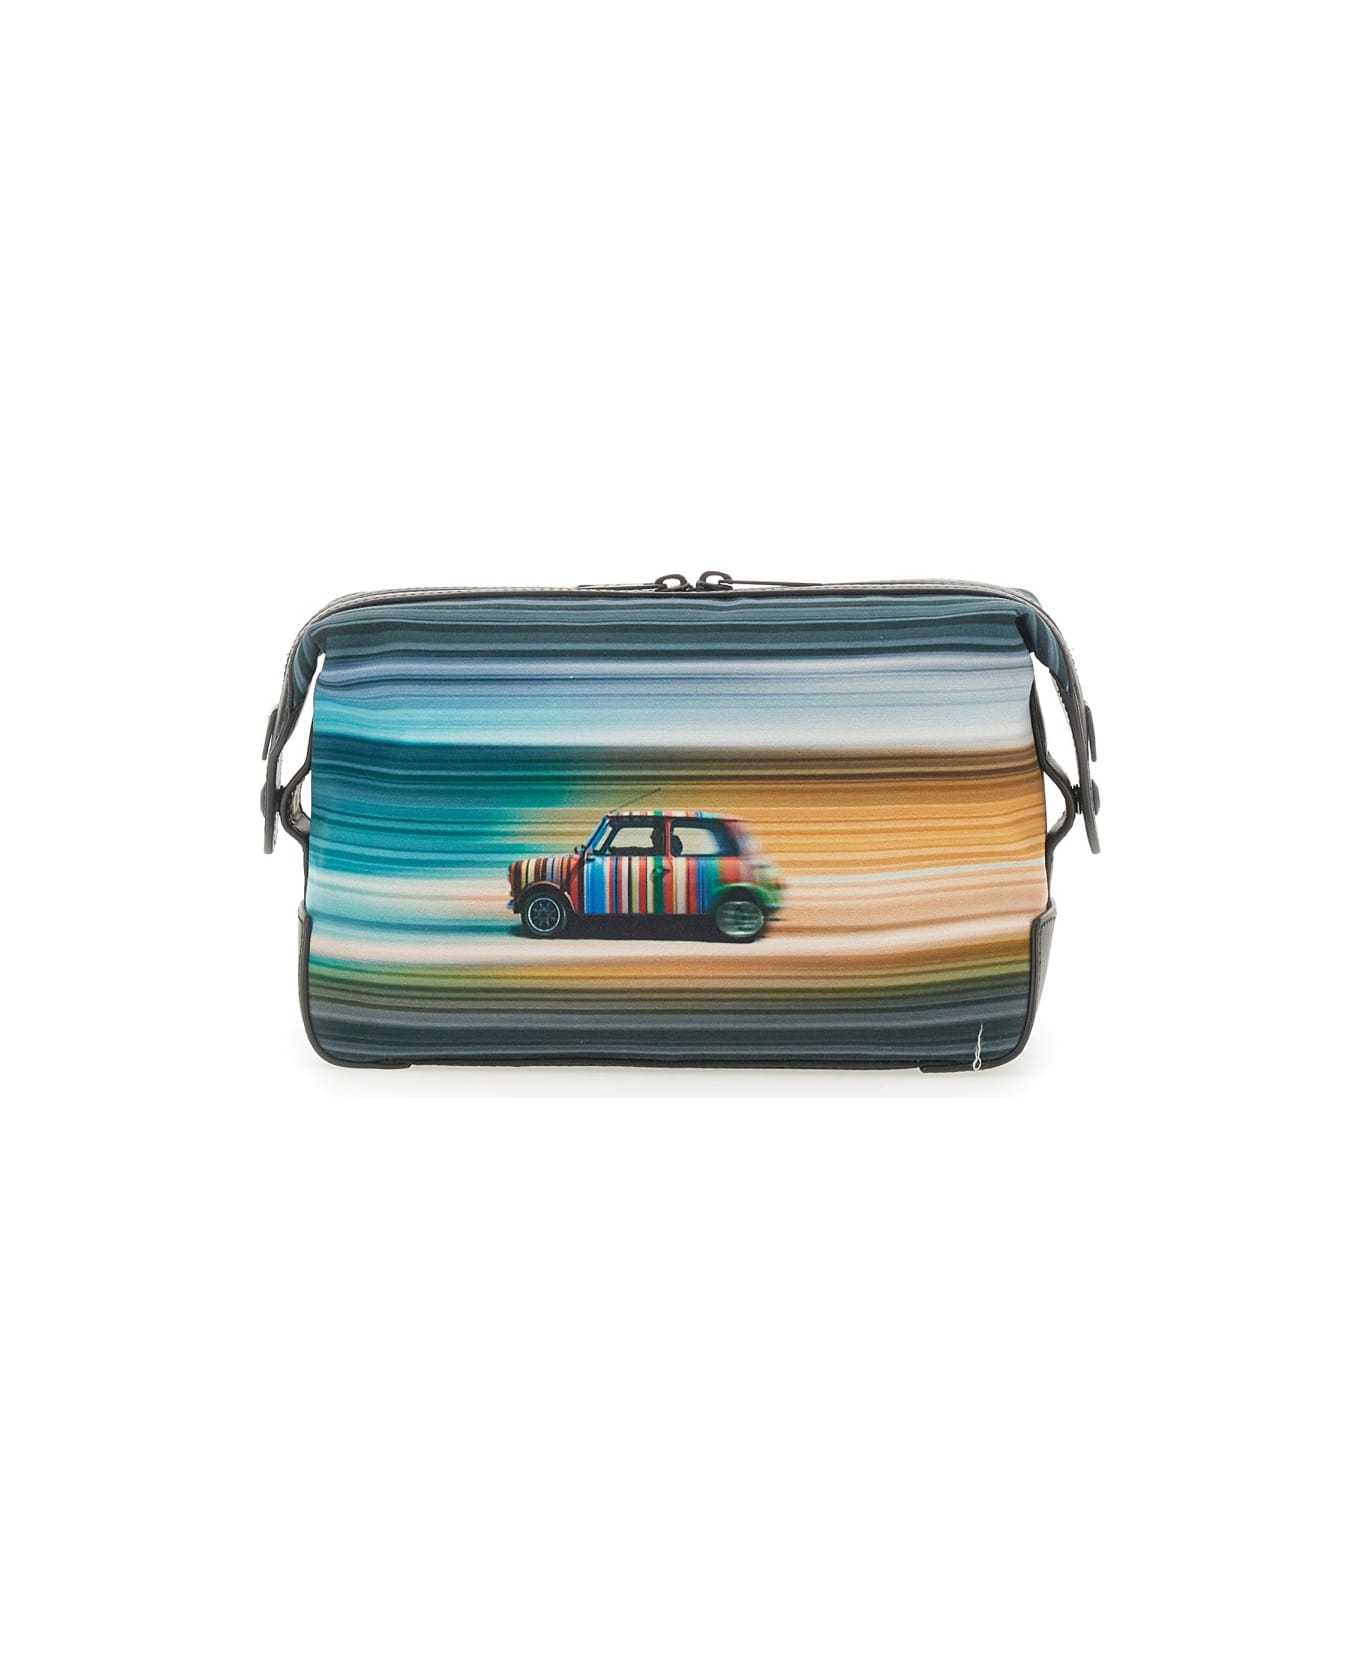 Paul Smith 'mini Blur' Travel Clutch Bag - PRINTED